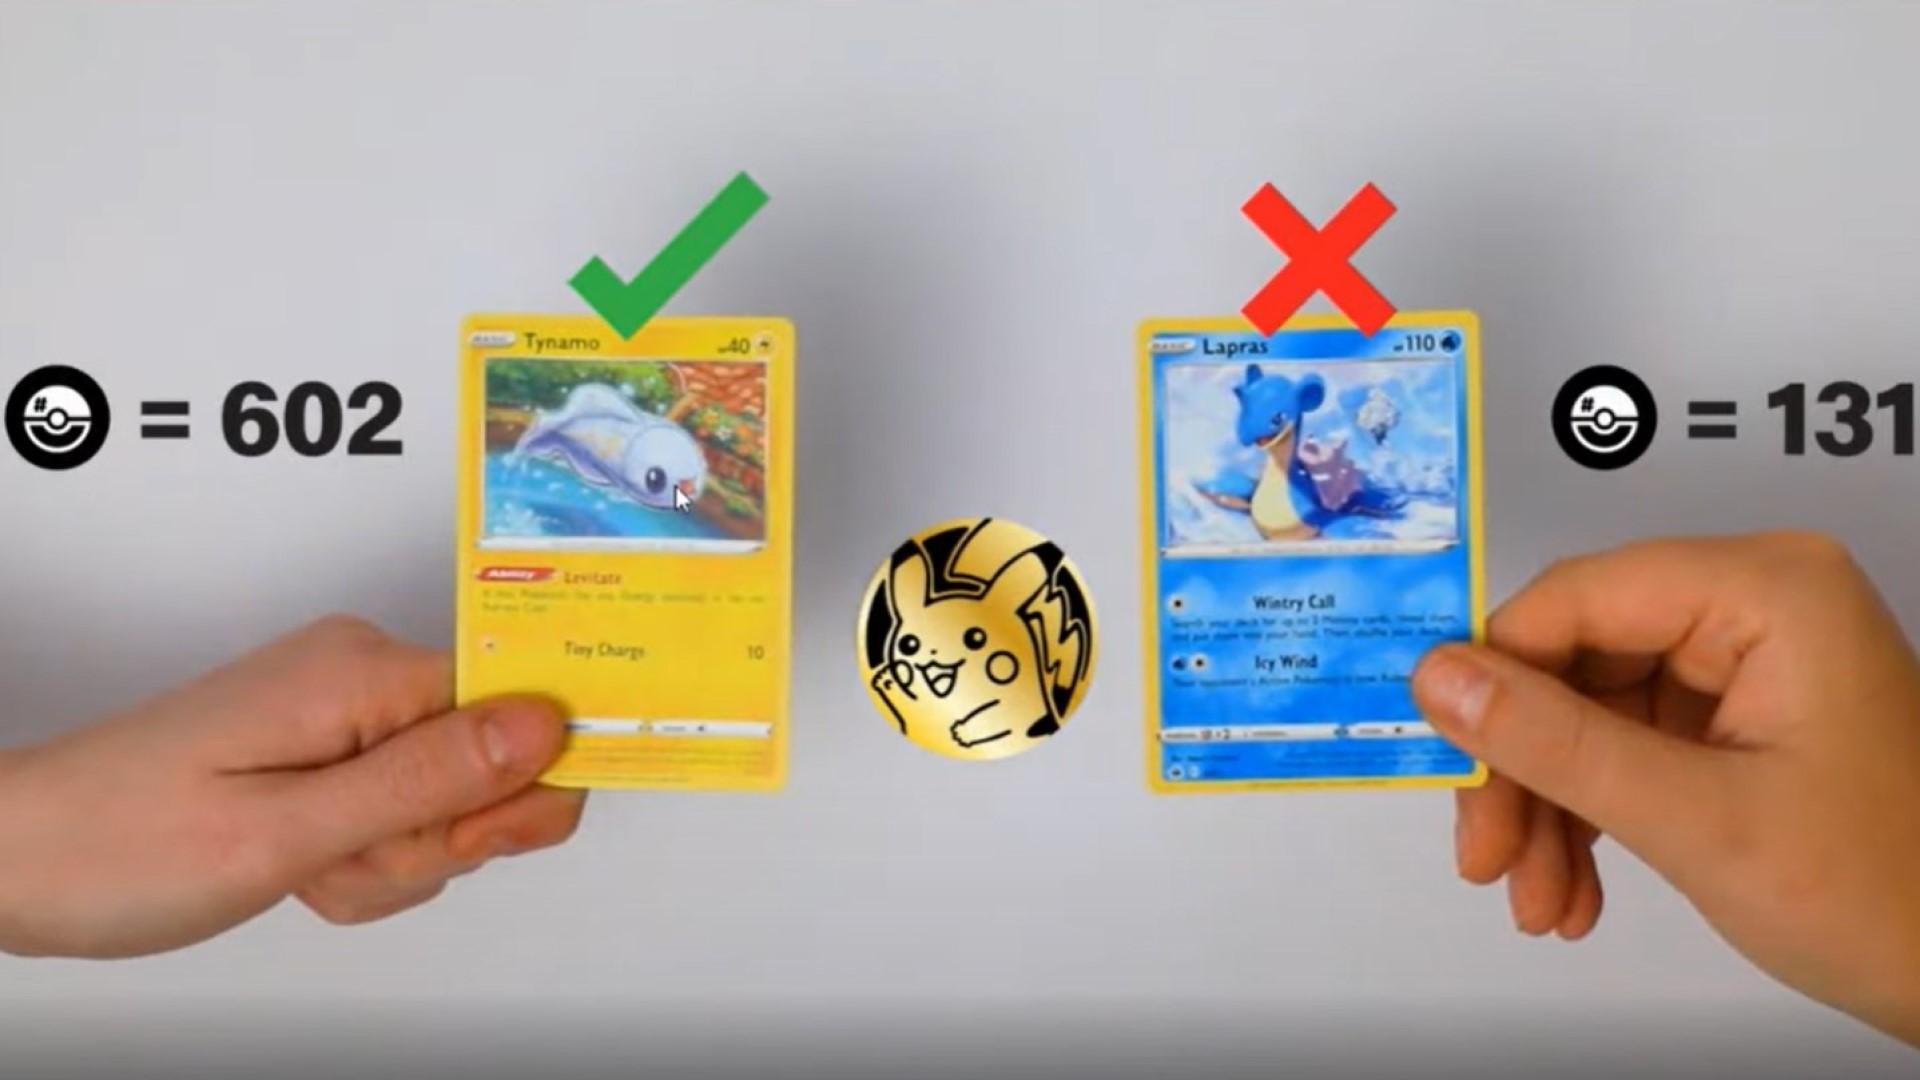 Pokémon TCG: All 15 McDonald's Promo 2023 Cards